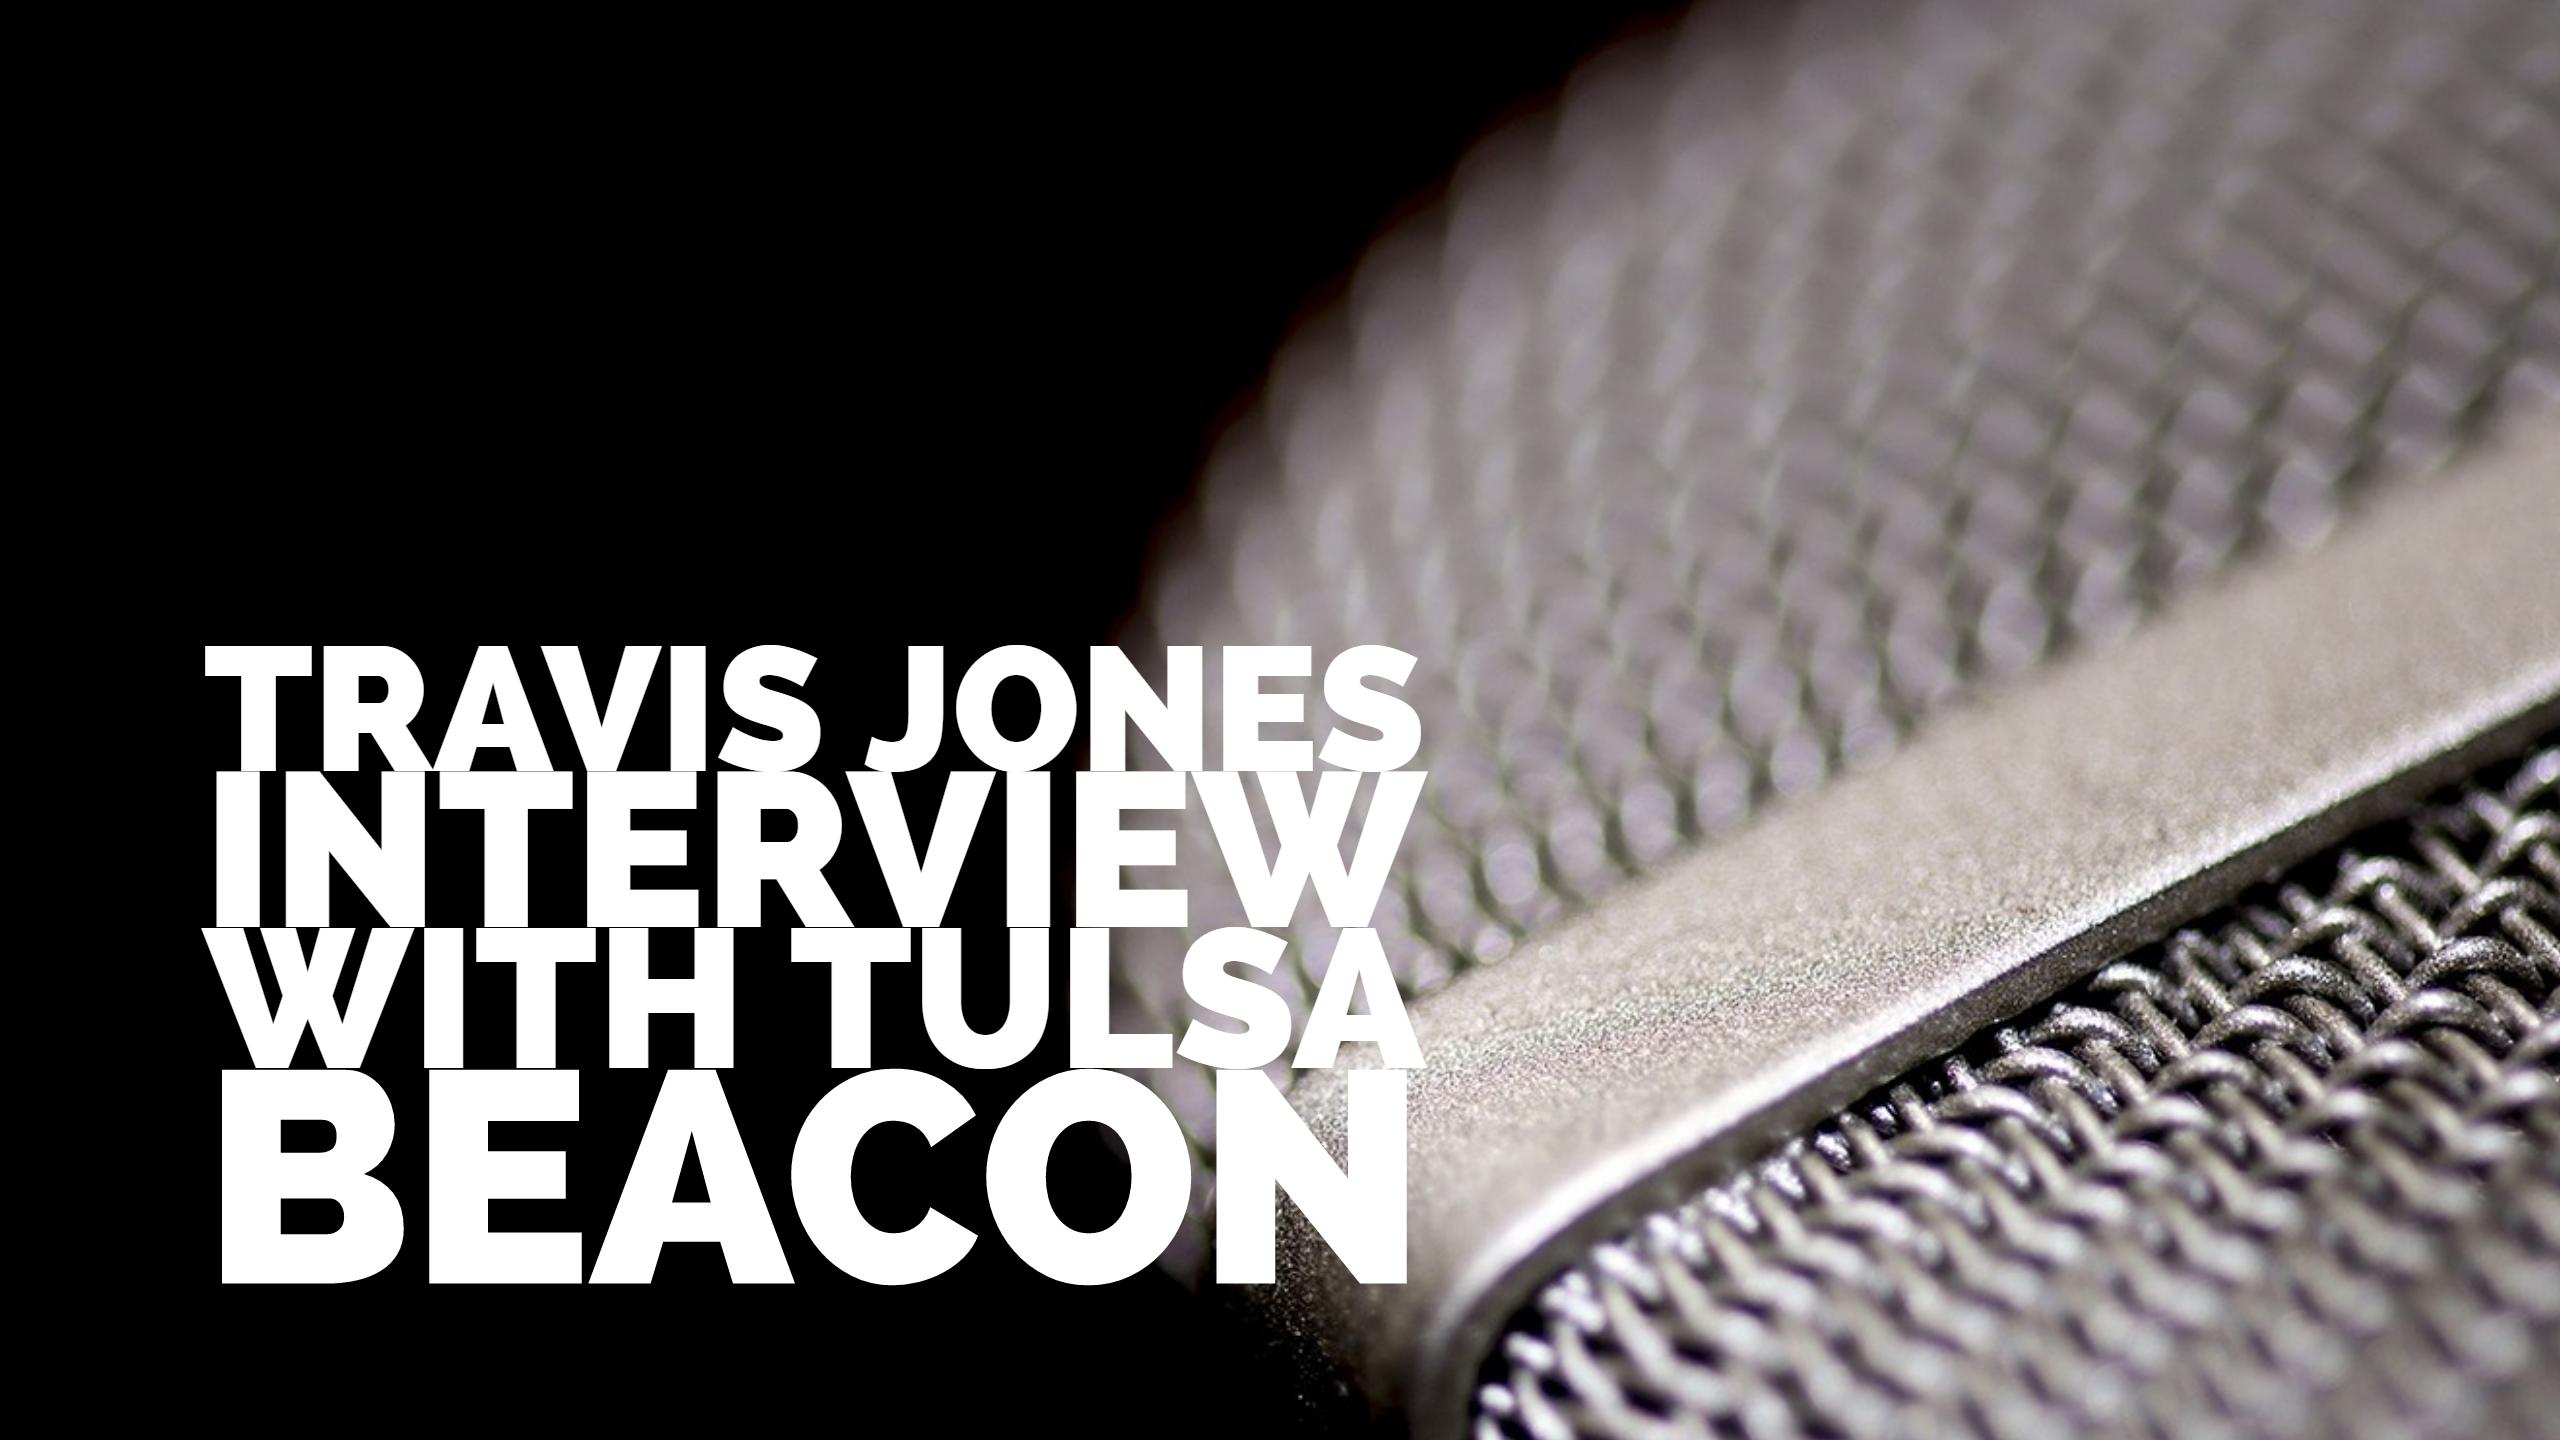 Travis Jones Interview with Tulsa Beacon